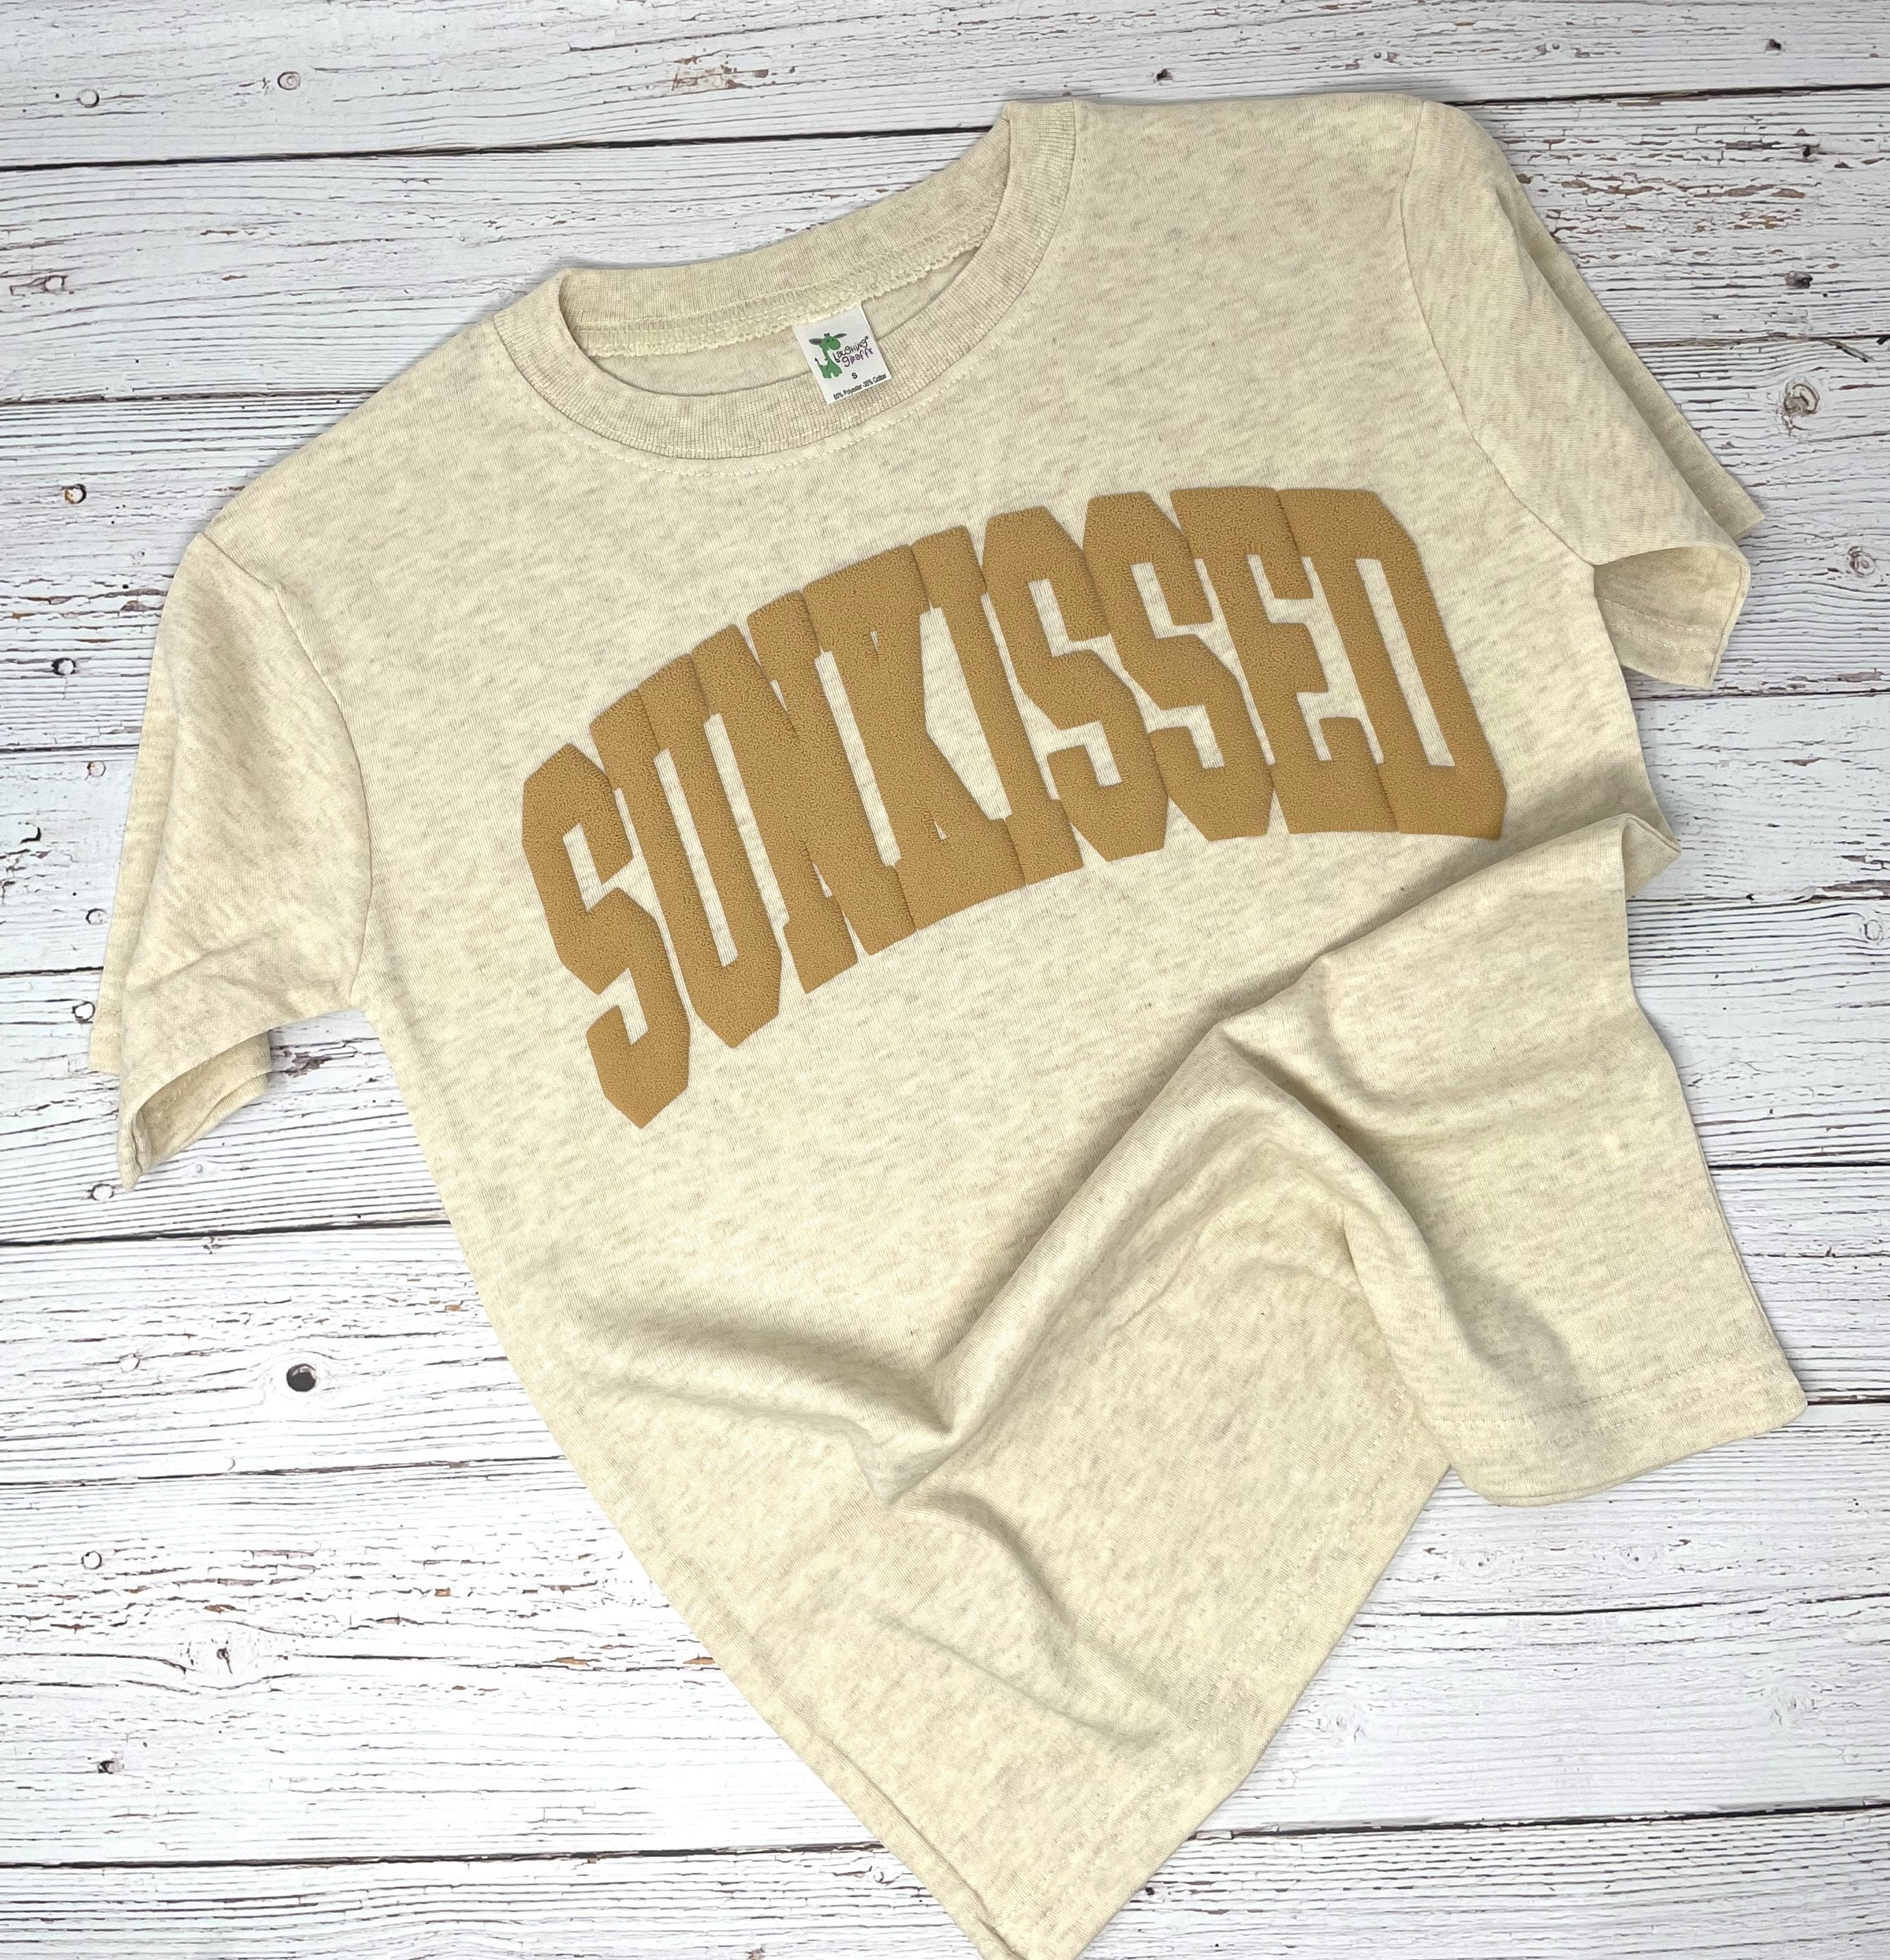 Kustomized T-shirt, Puffy Vinyl – Blingy Kustomz by BeeBop